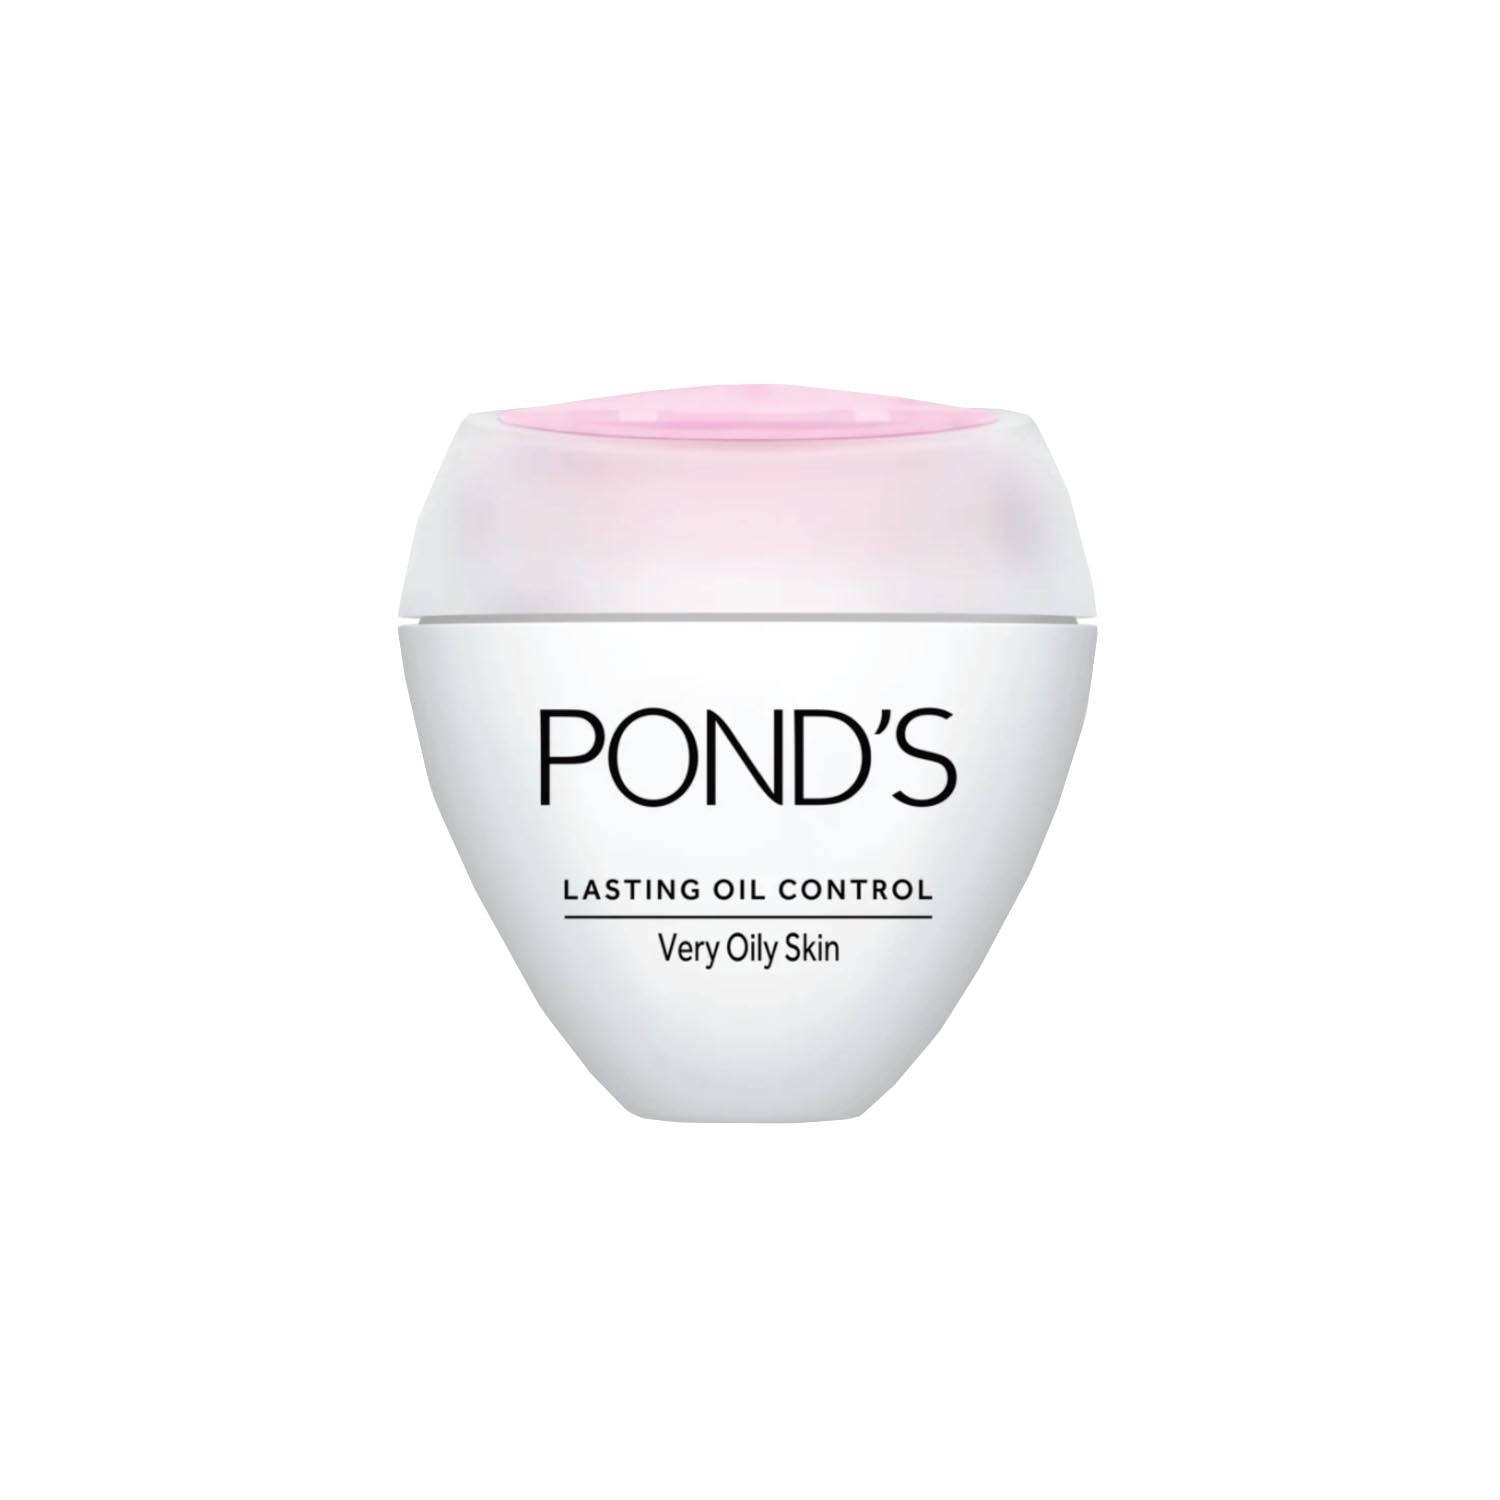 Pond's Lasting Oil Control Vanishing Cream for Oily Skin, 50ml